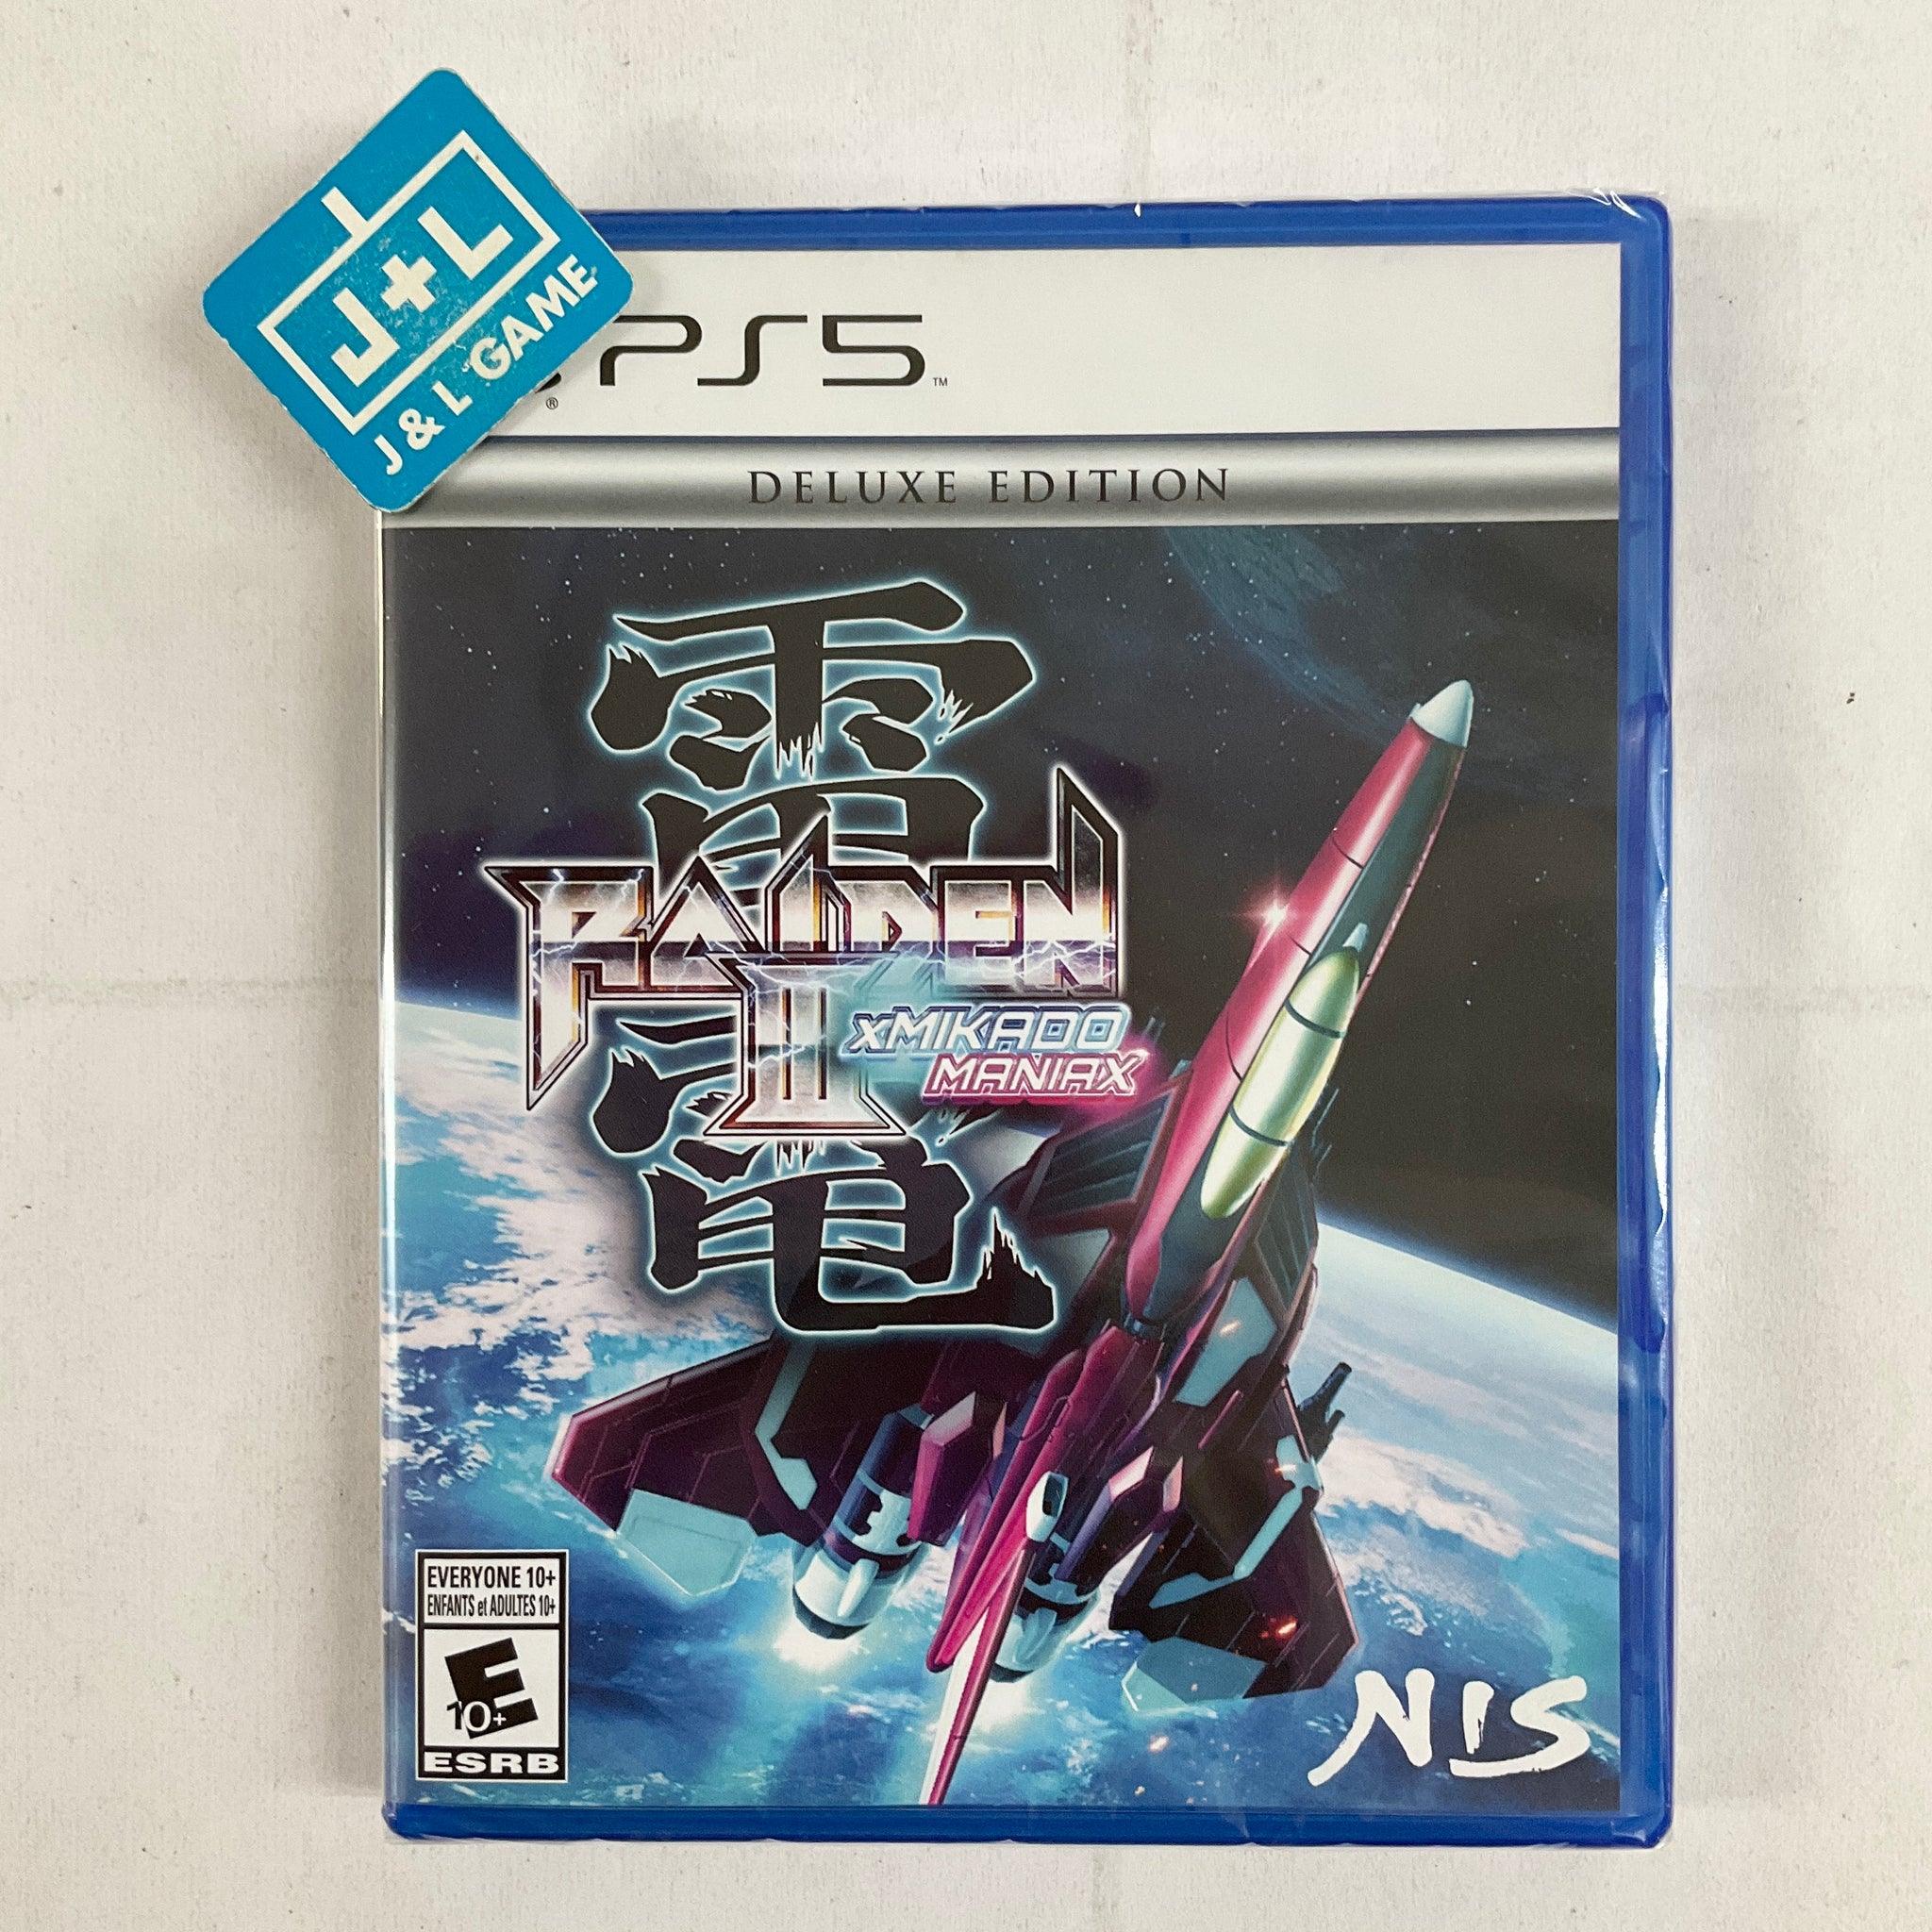 Raiden III x MIKADO MANIAX: Deluxe Edition - (PS5) PlayStation 5 Video Games NIS America   